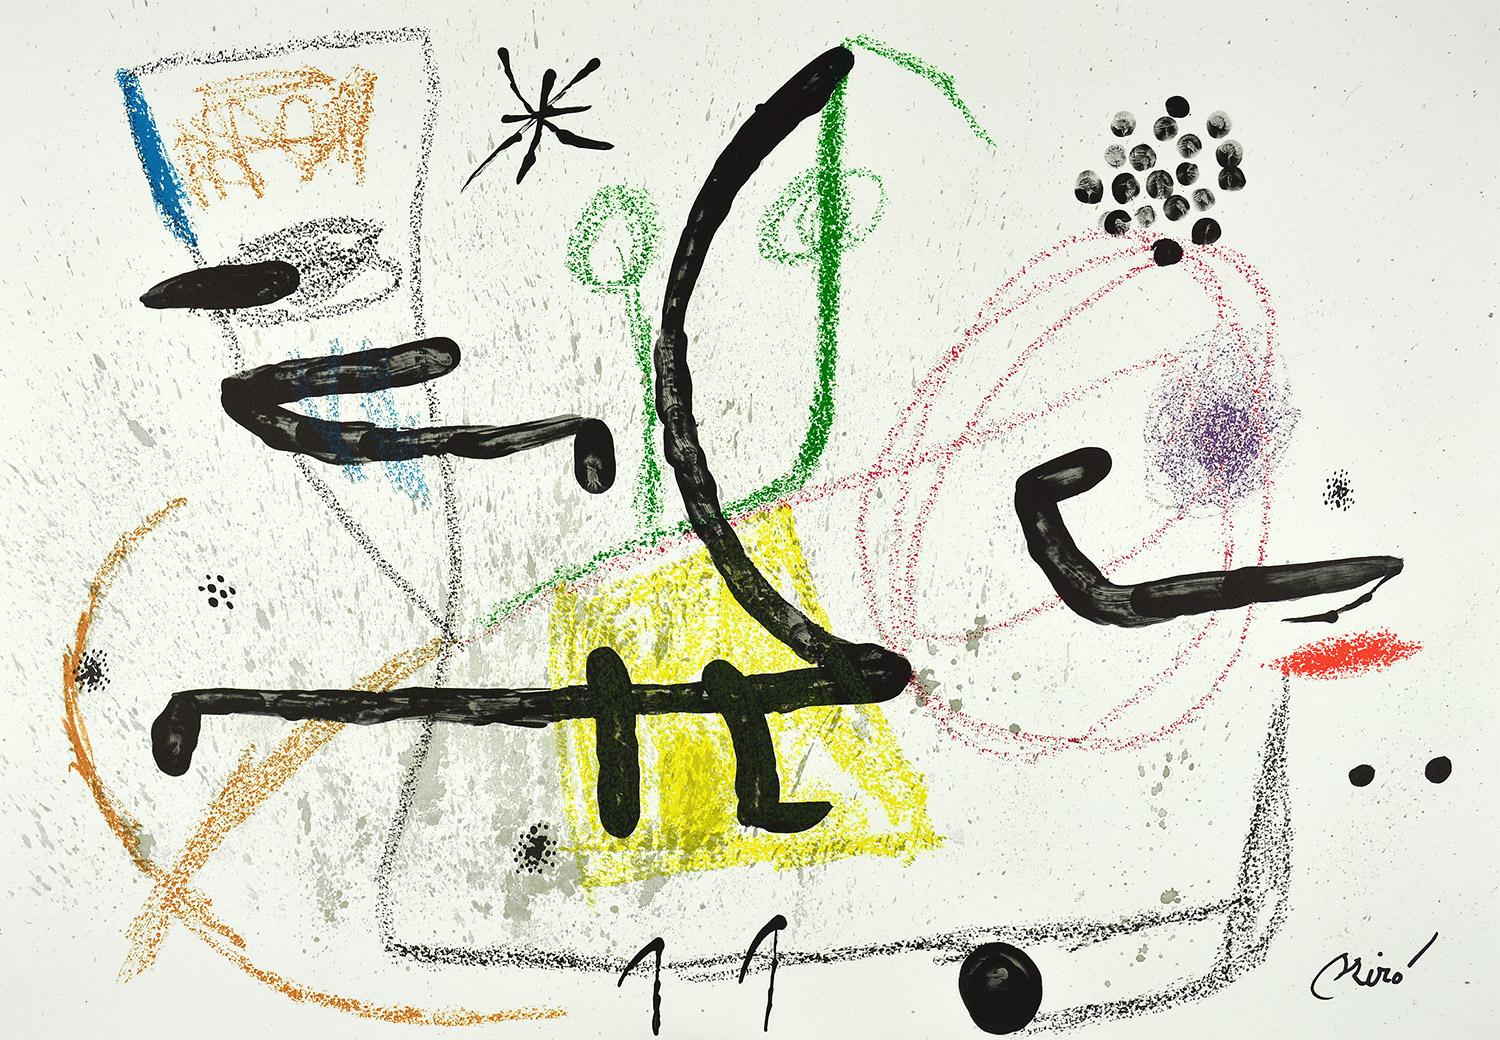 Joan Miró - Maravillas con variaciones acrósticas en el jardín de Miró IX
Datum der Gründung: 1975
Medium: Lithographie
Medien: Gvarro-Papier
Auflage: 1500
Größe: 49,5 x 71 cm
Beobachtungen:
Lithographie auf Gvarro-Papierplatte signiert.